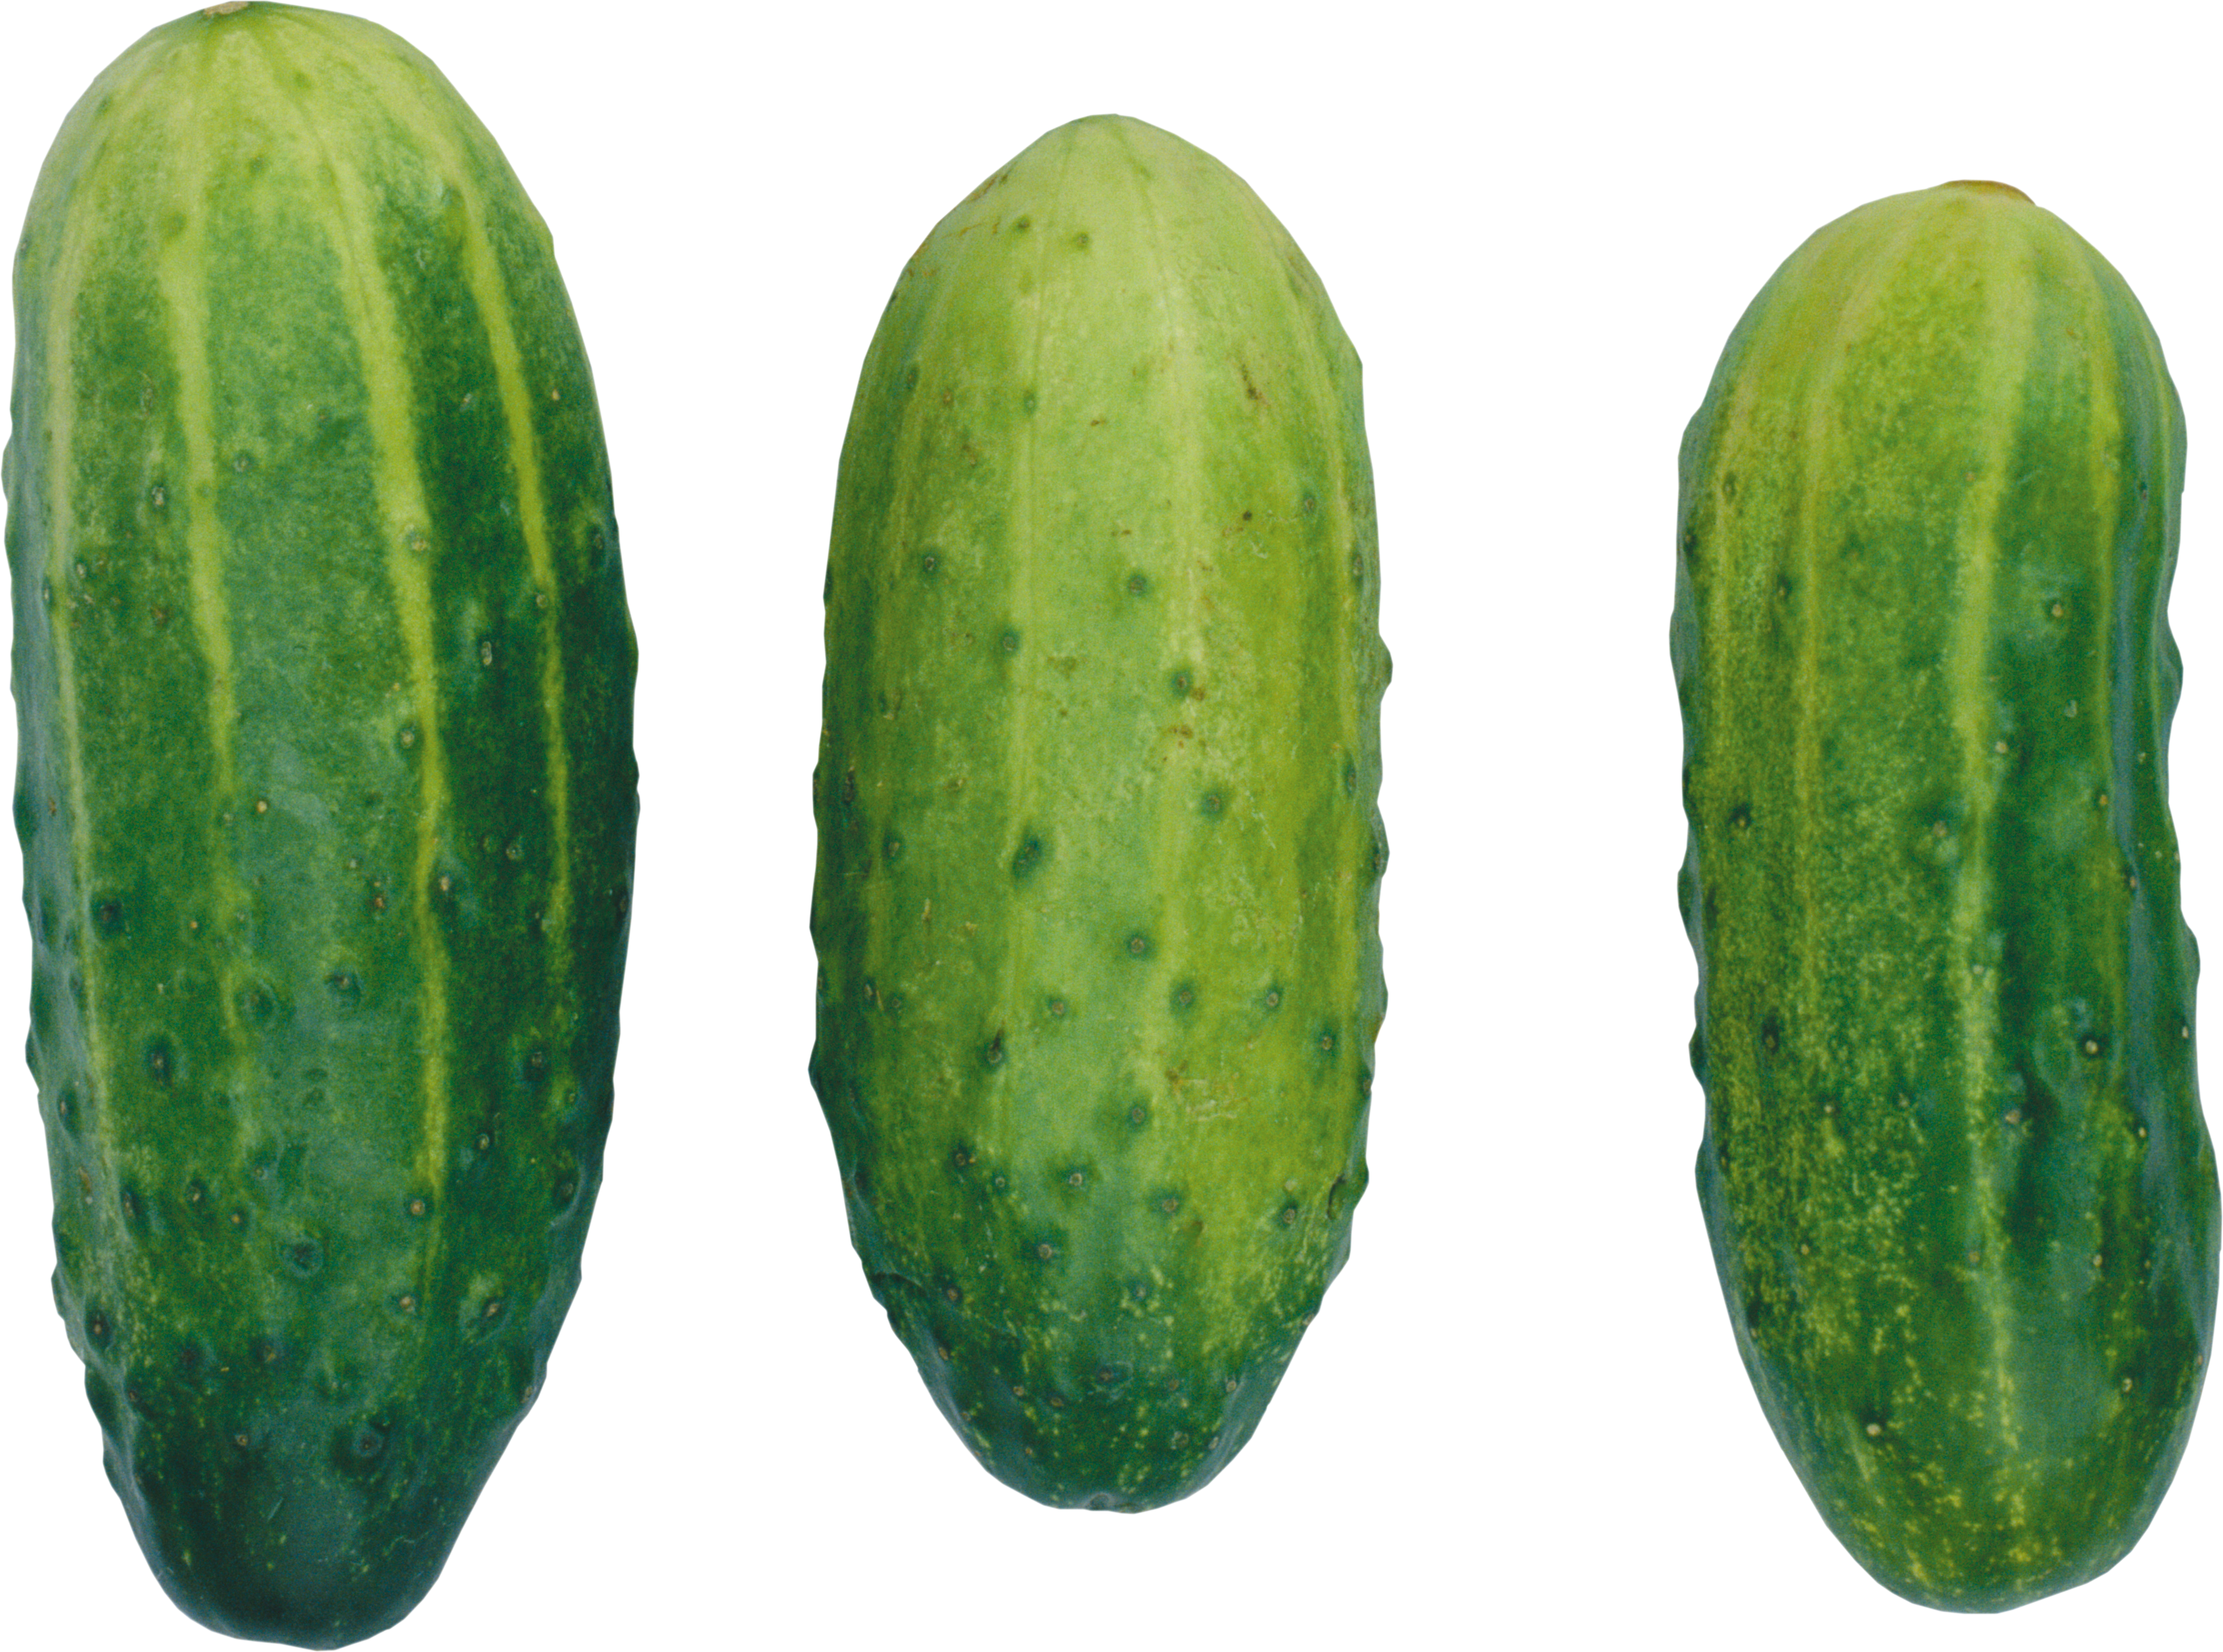 Cucumber Png - Cucumber, Transparent background PNG HD thumbnail